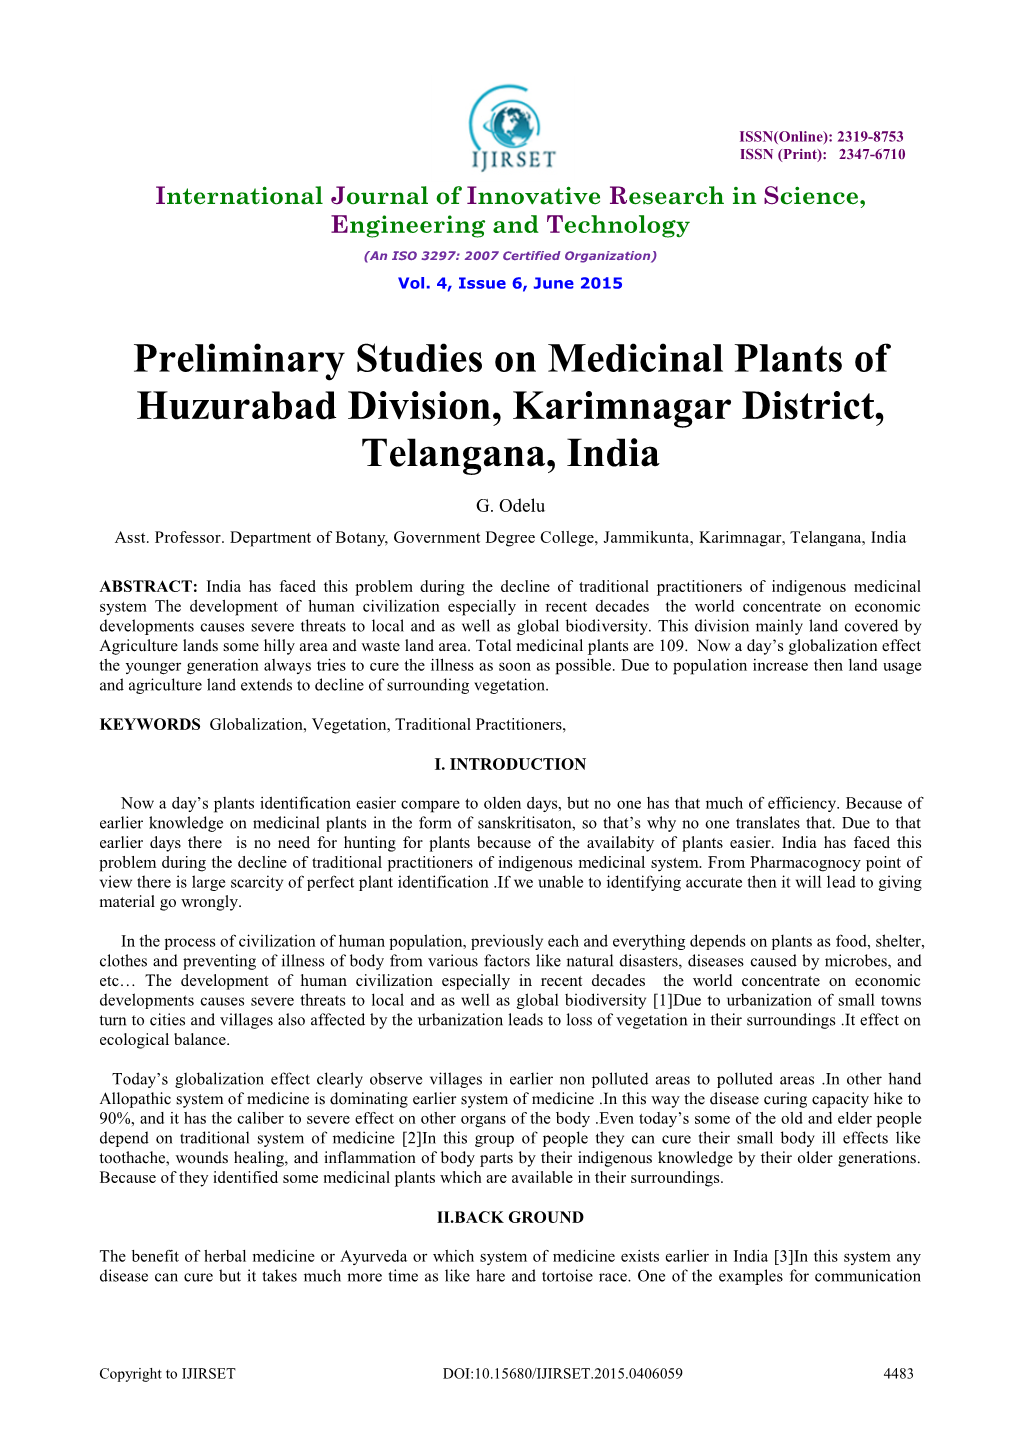 Preliminary Studies on Medicinal Plants of Huzurabad Division, Karimnagar District, Telangana, India